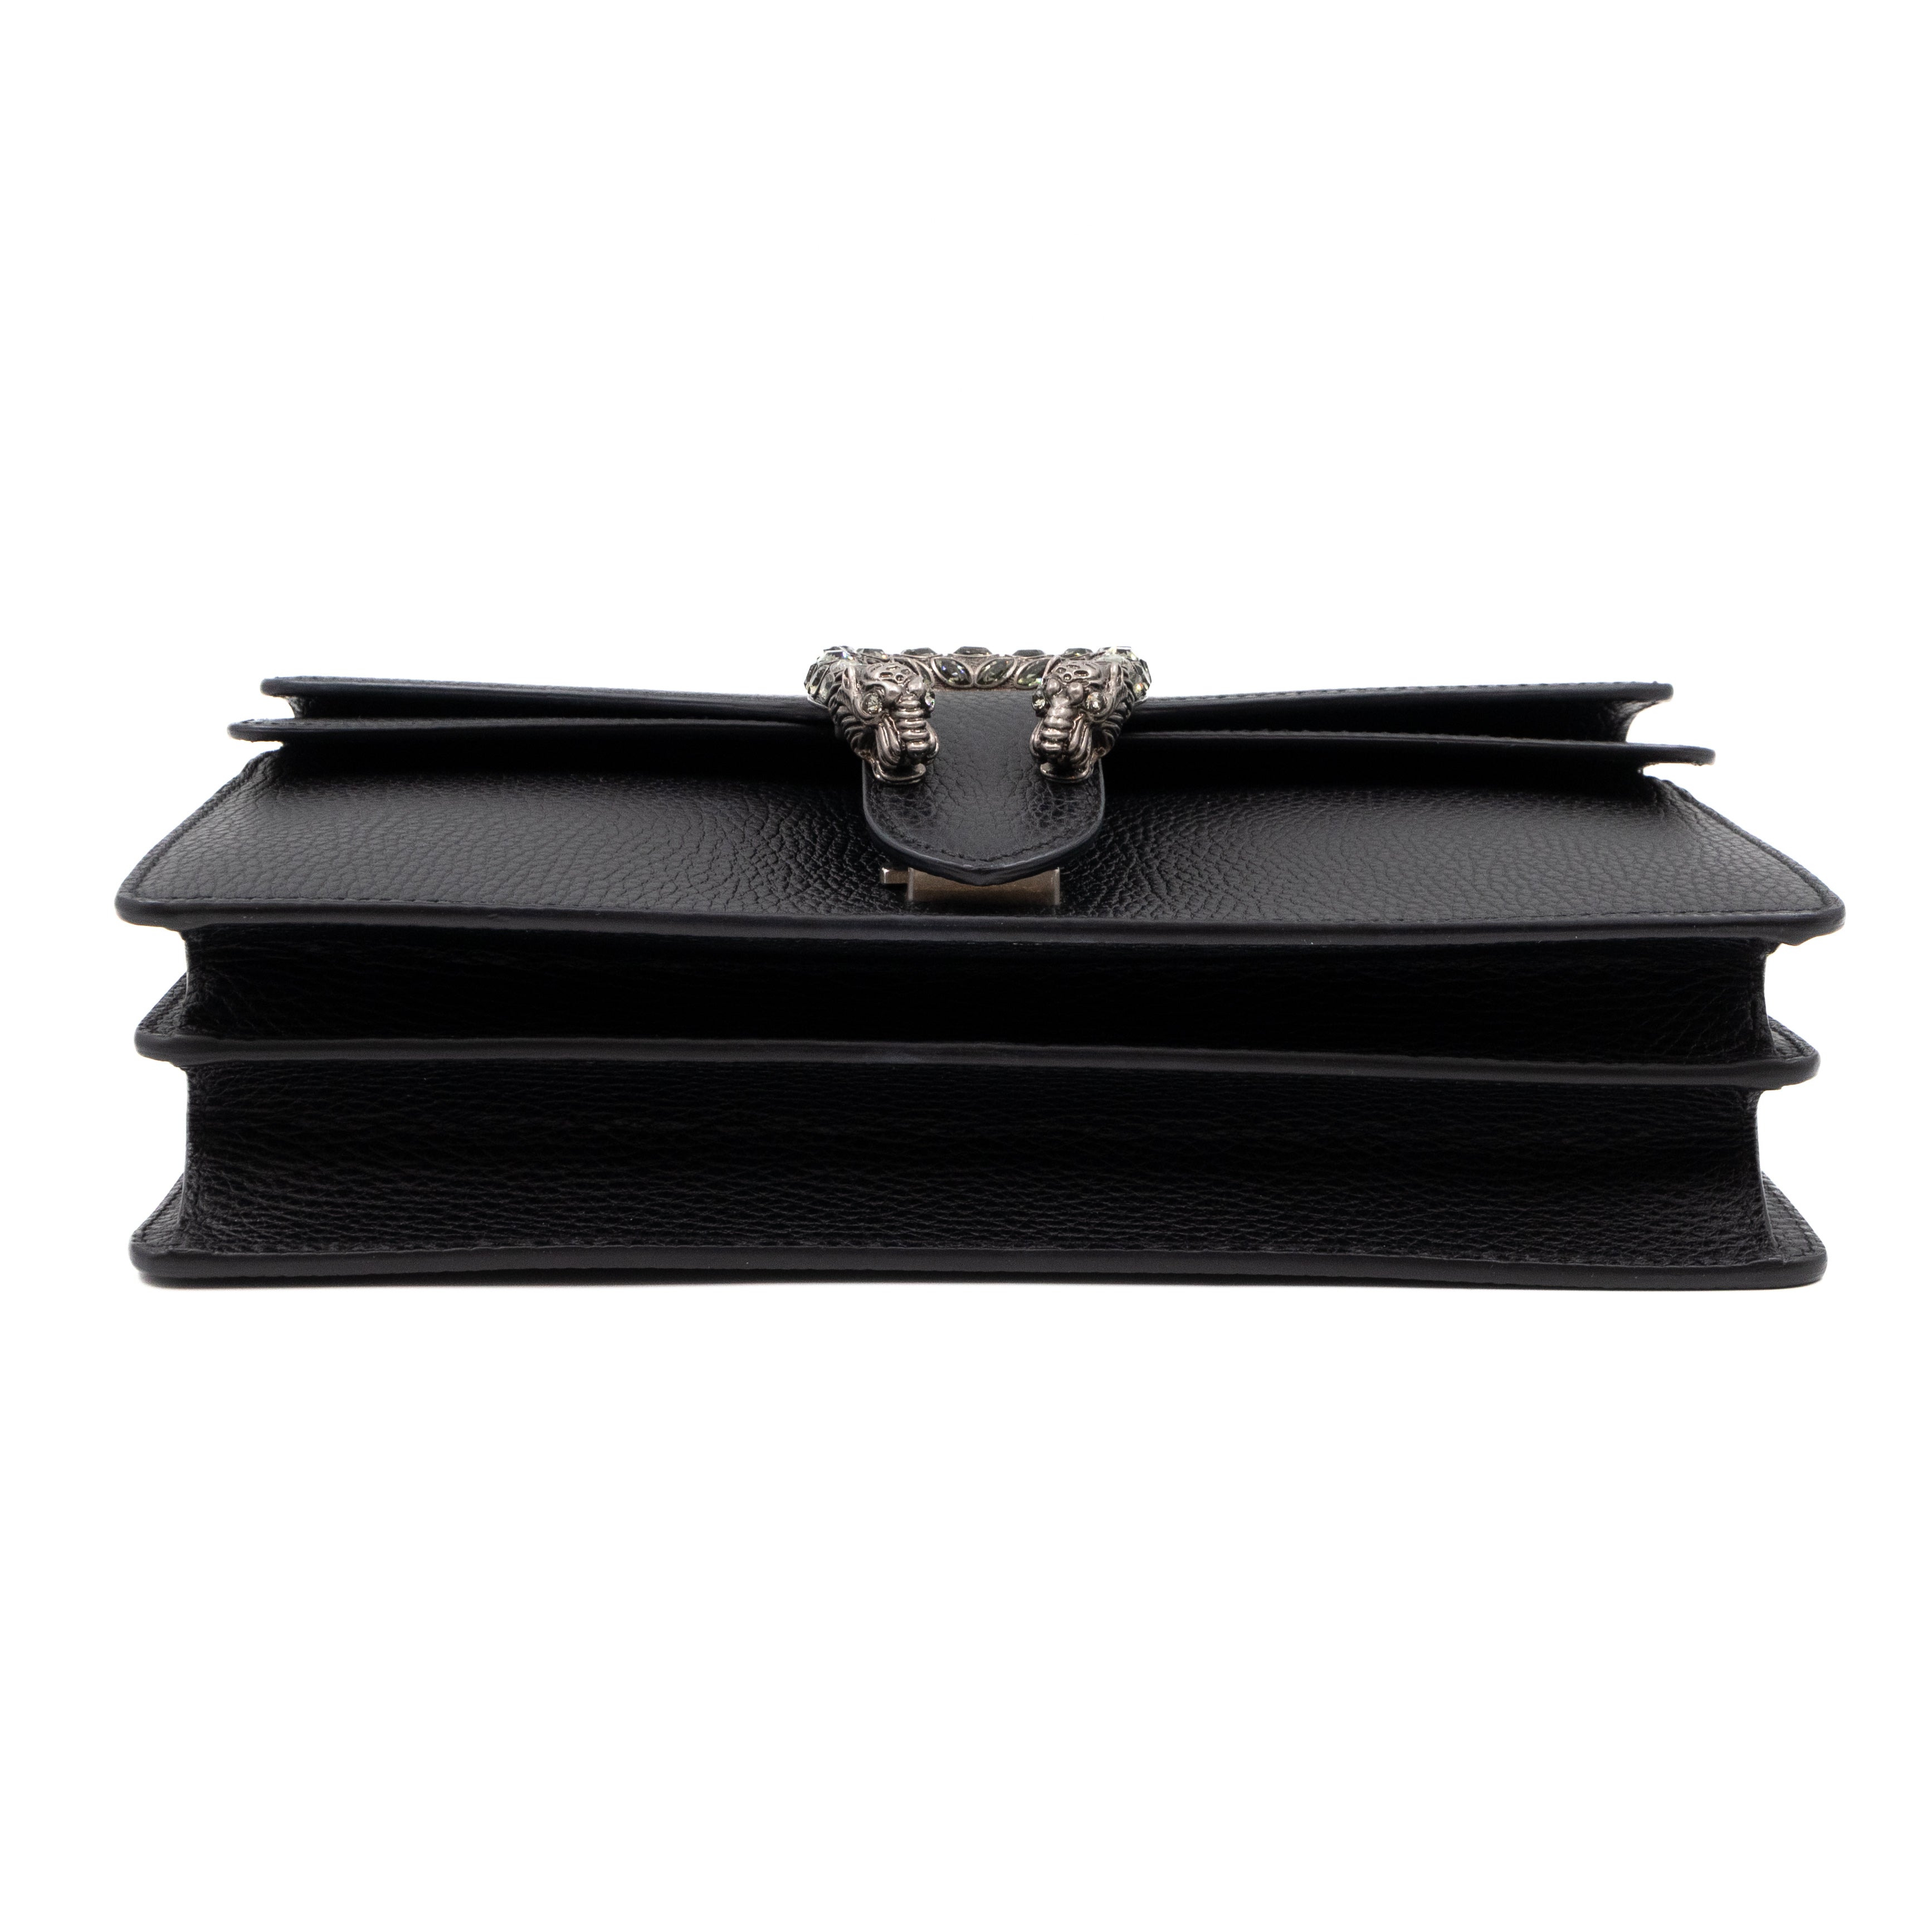 Gucci Soho Small Leather Tote Bag w/ Chain Straps, Black | Gucci soho bag, Black  leather handbags, Gucci tote bag